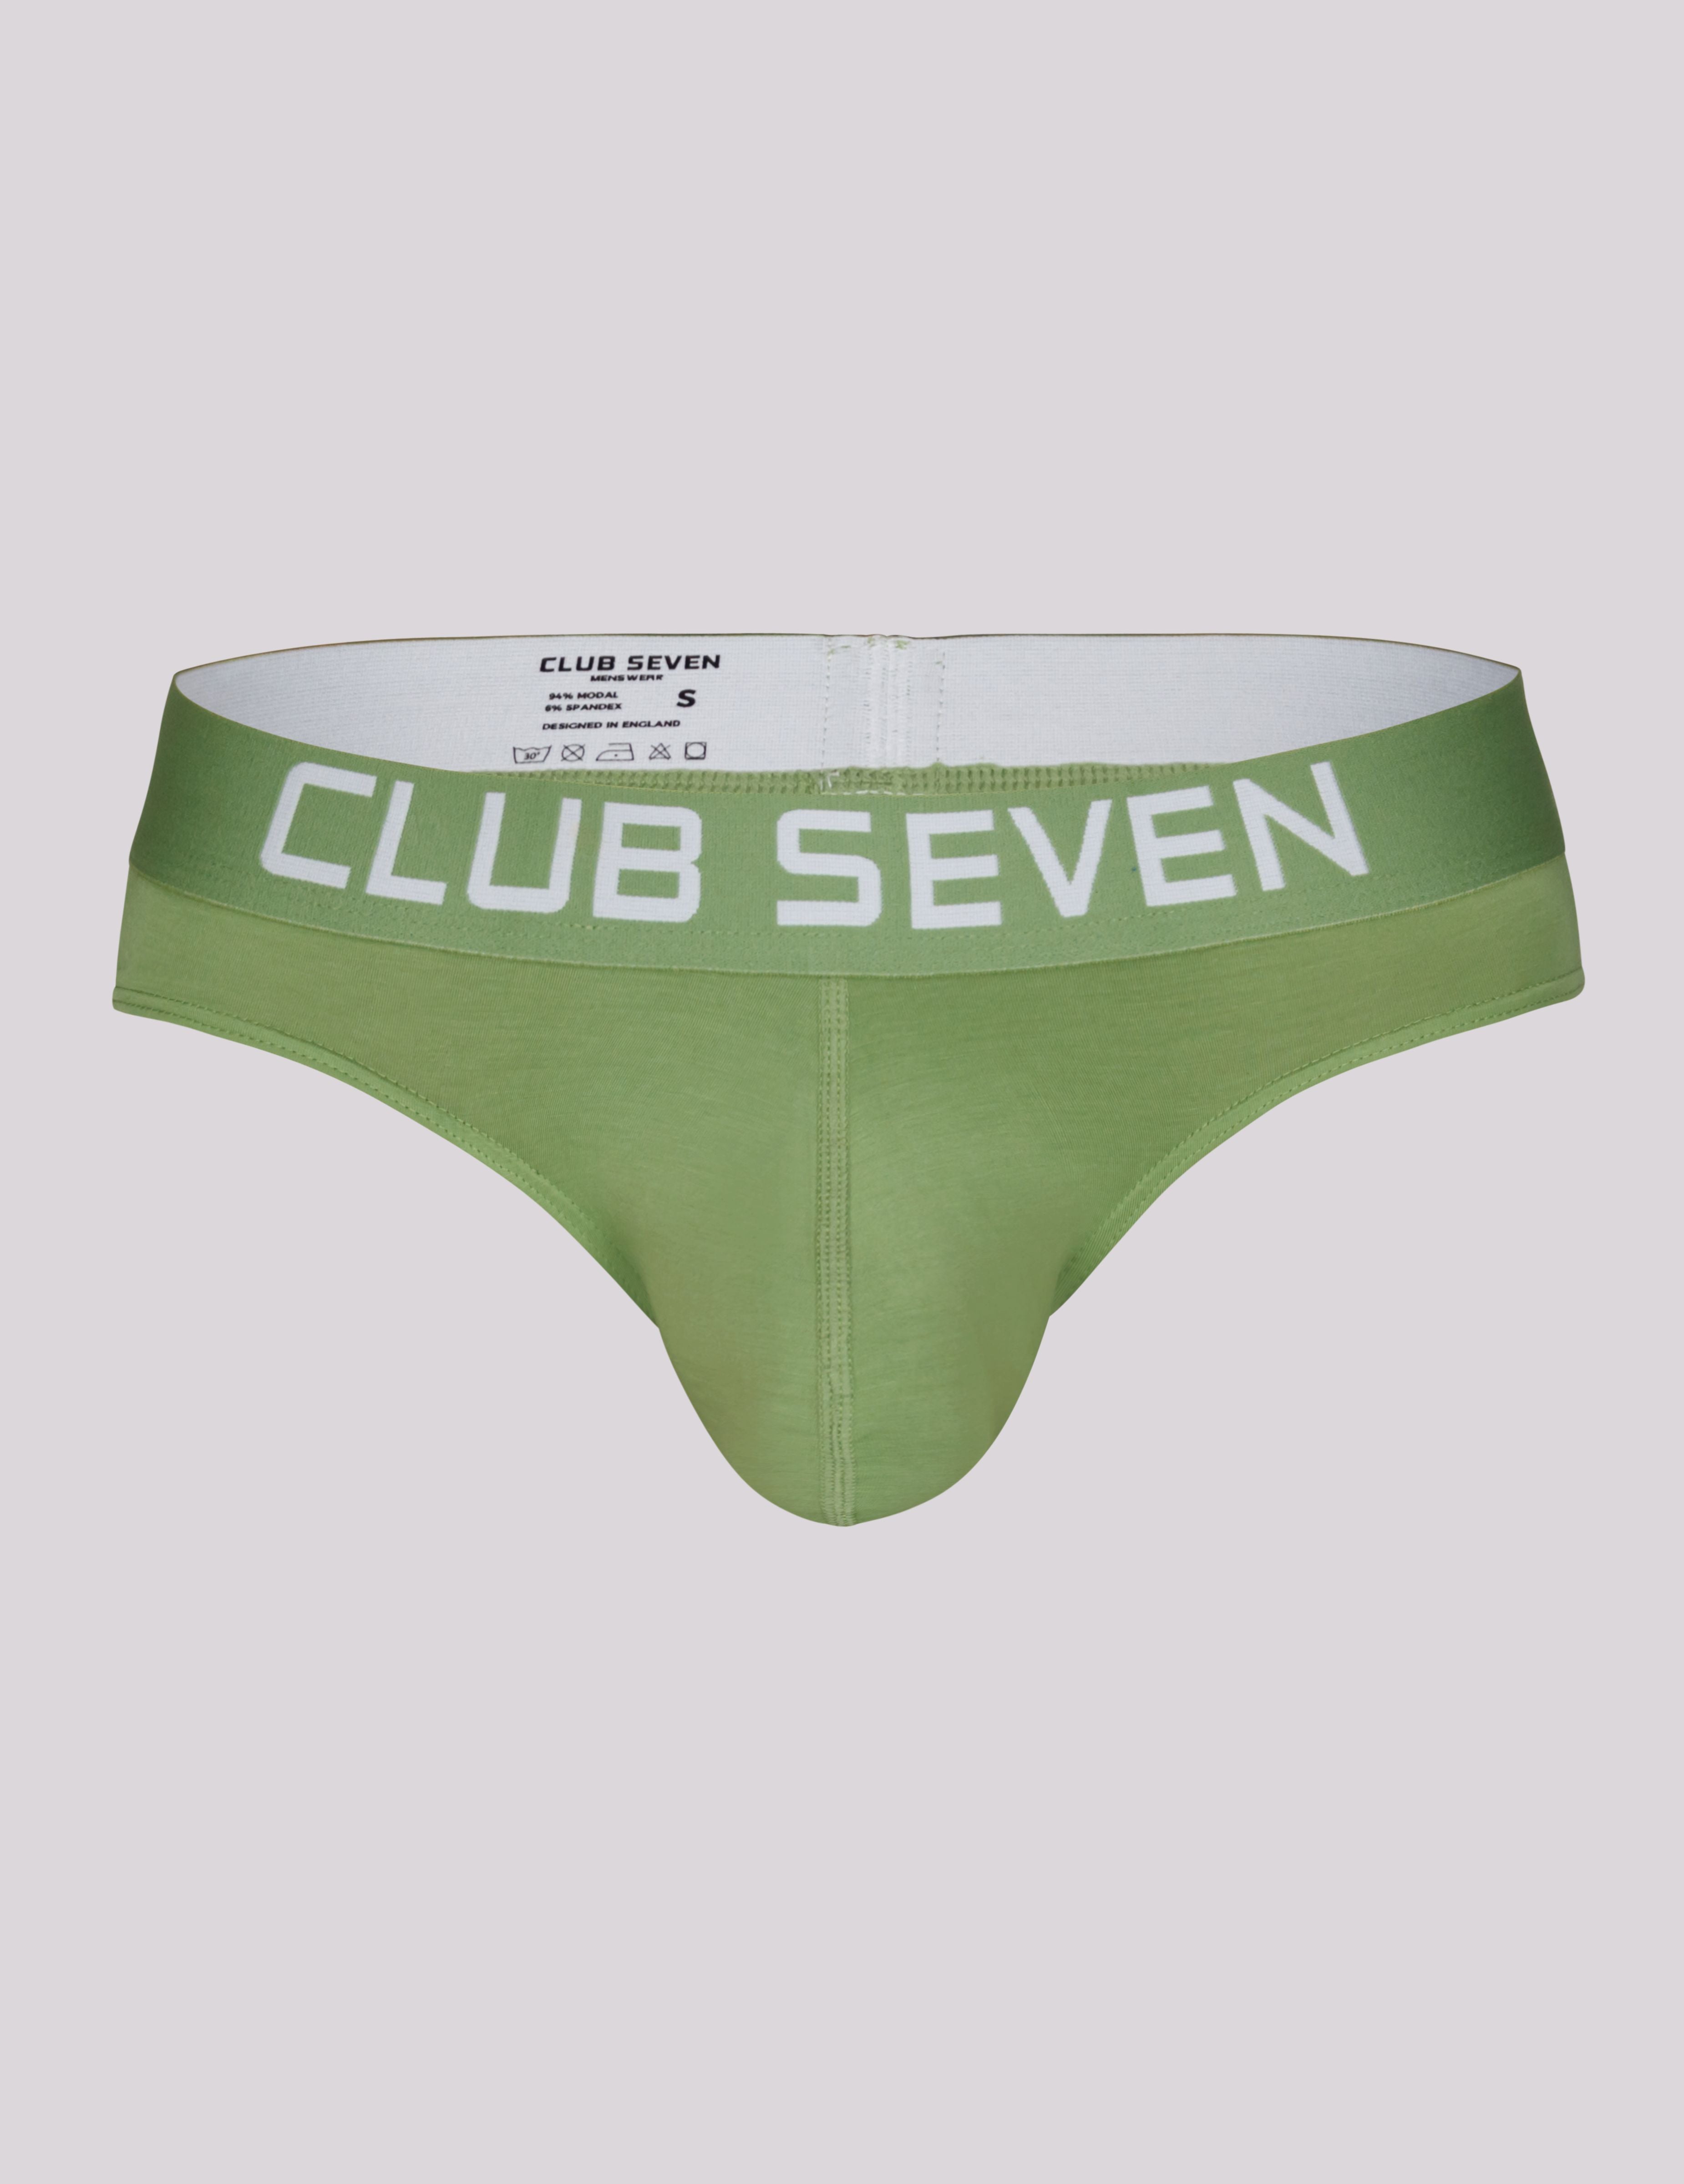 Men's Underwear Store. The Best Men's Underwear Stores, by Club Seven  Menswear